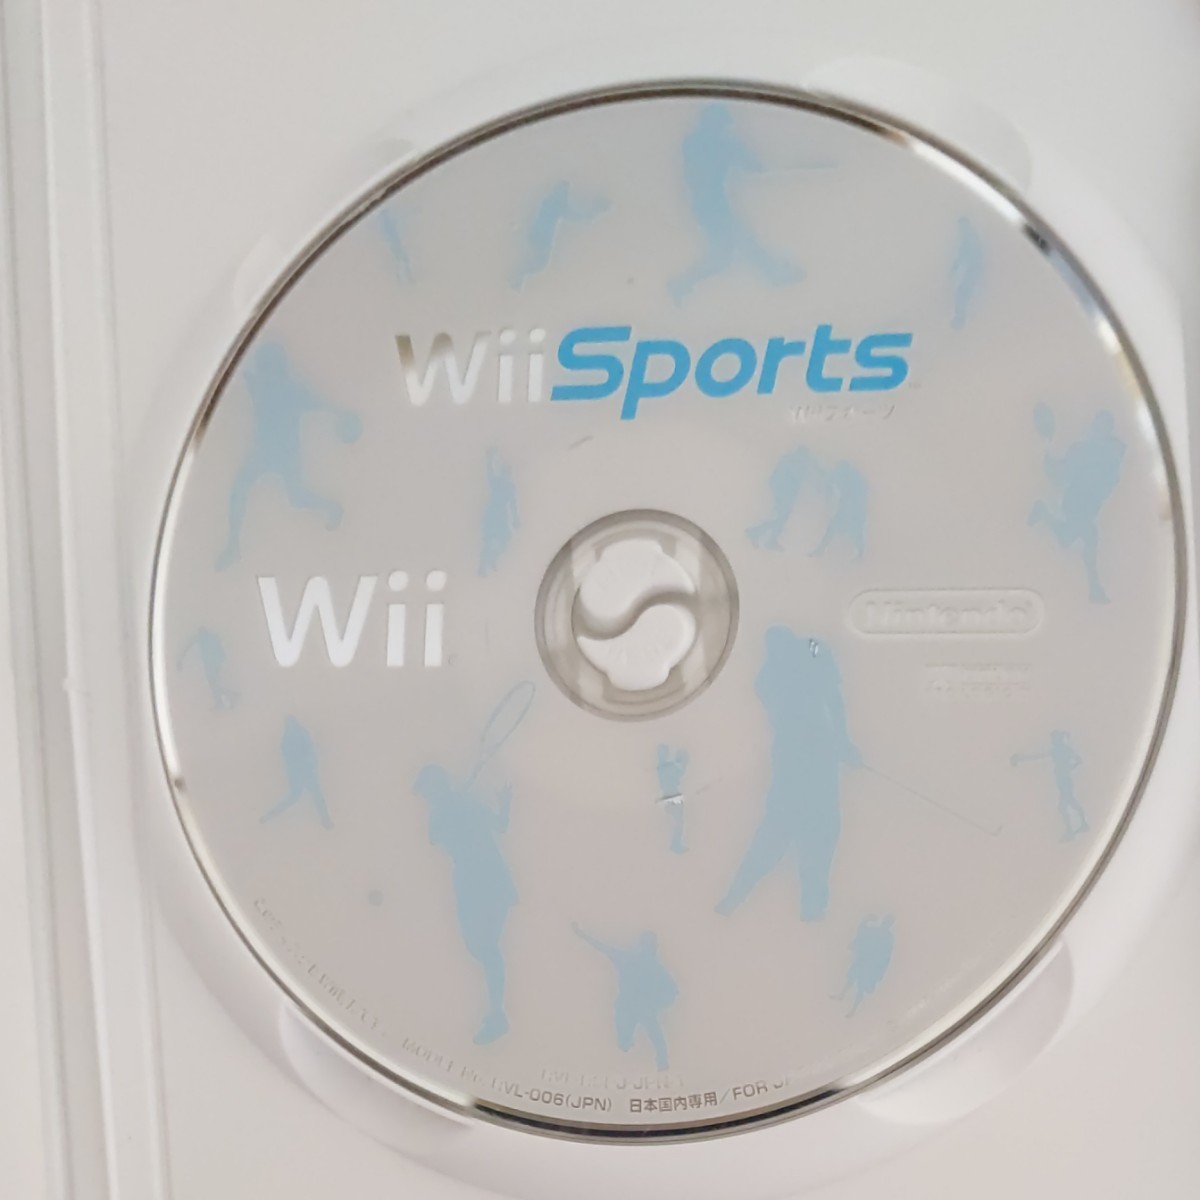 Wiiスポーツ Wii Sports